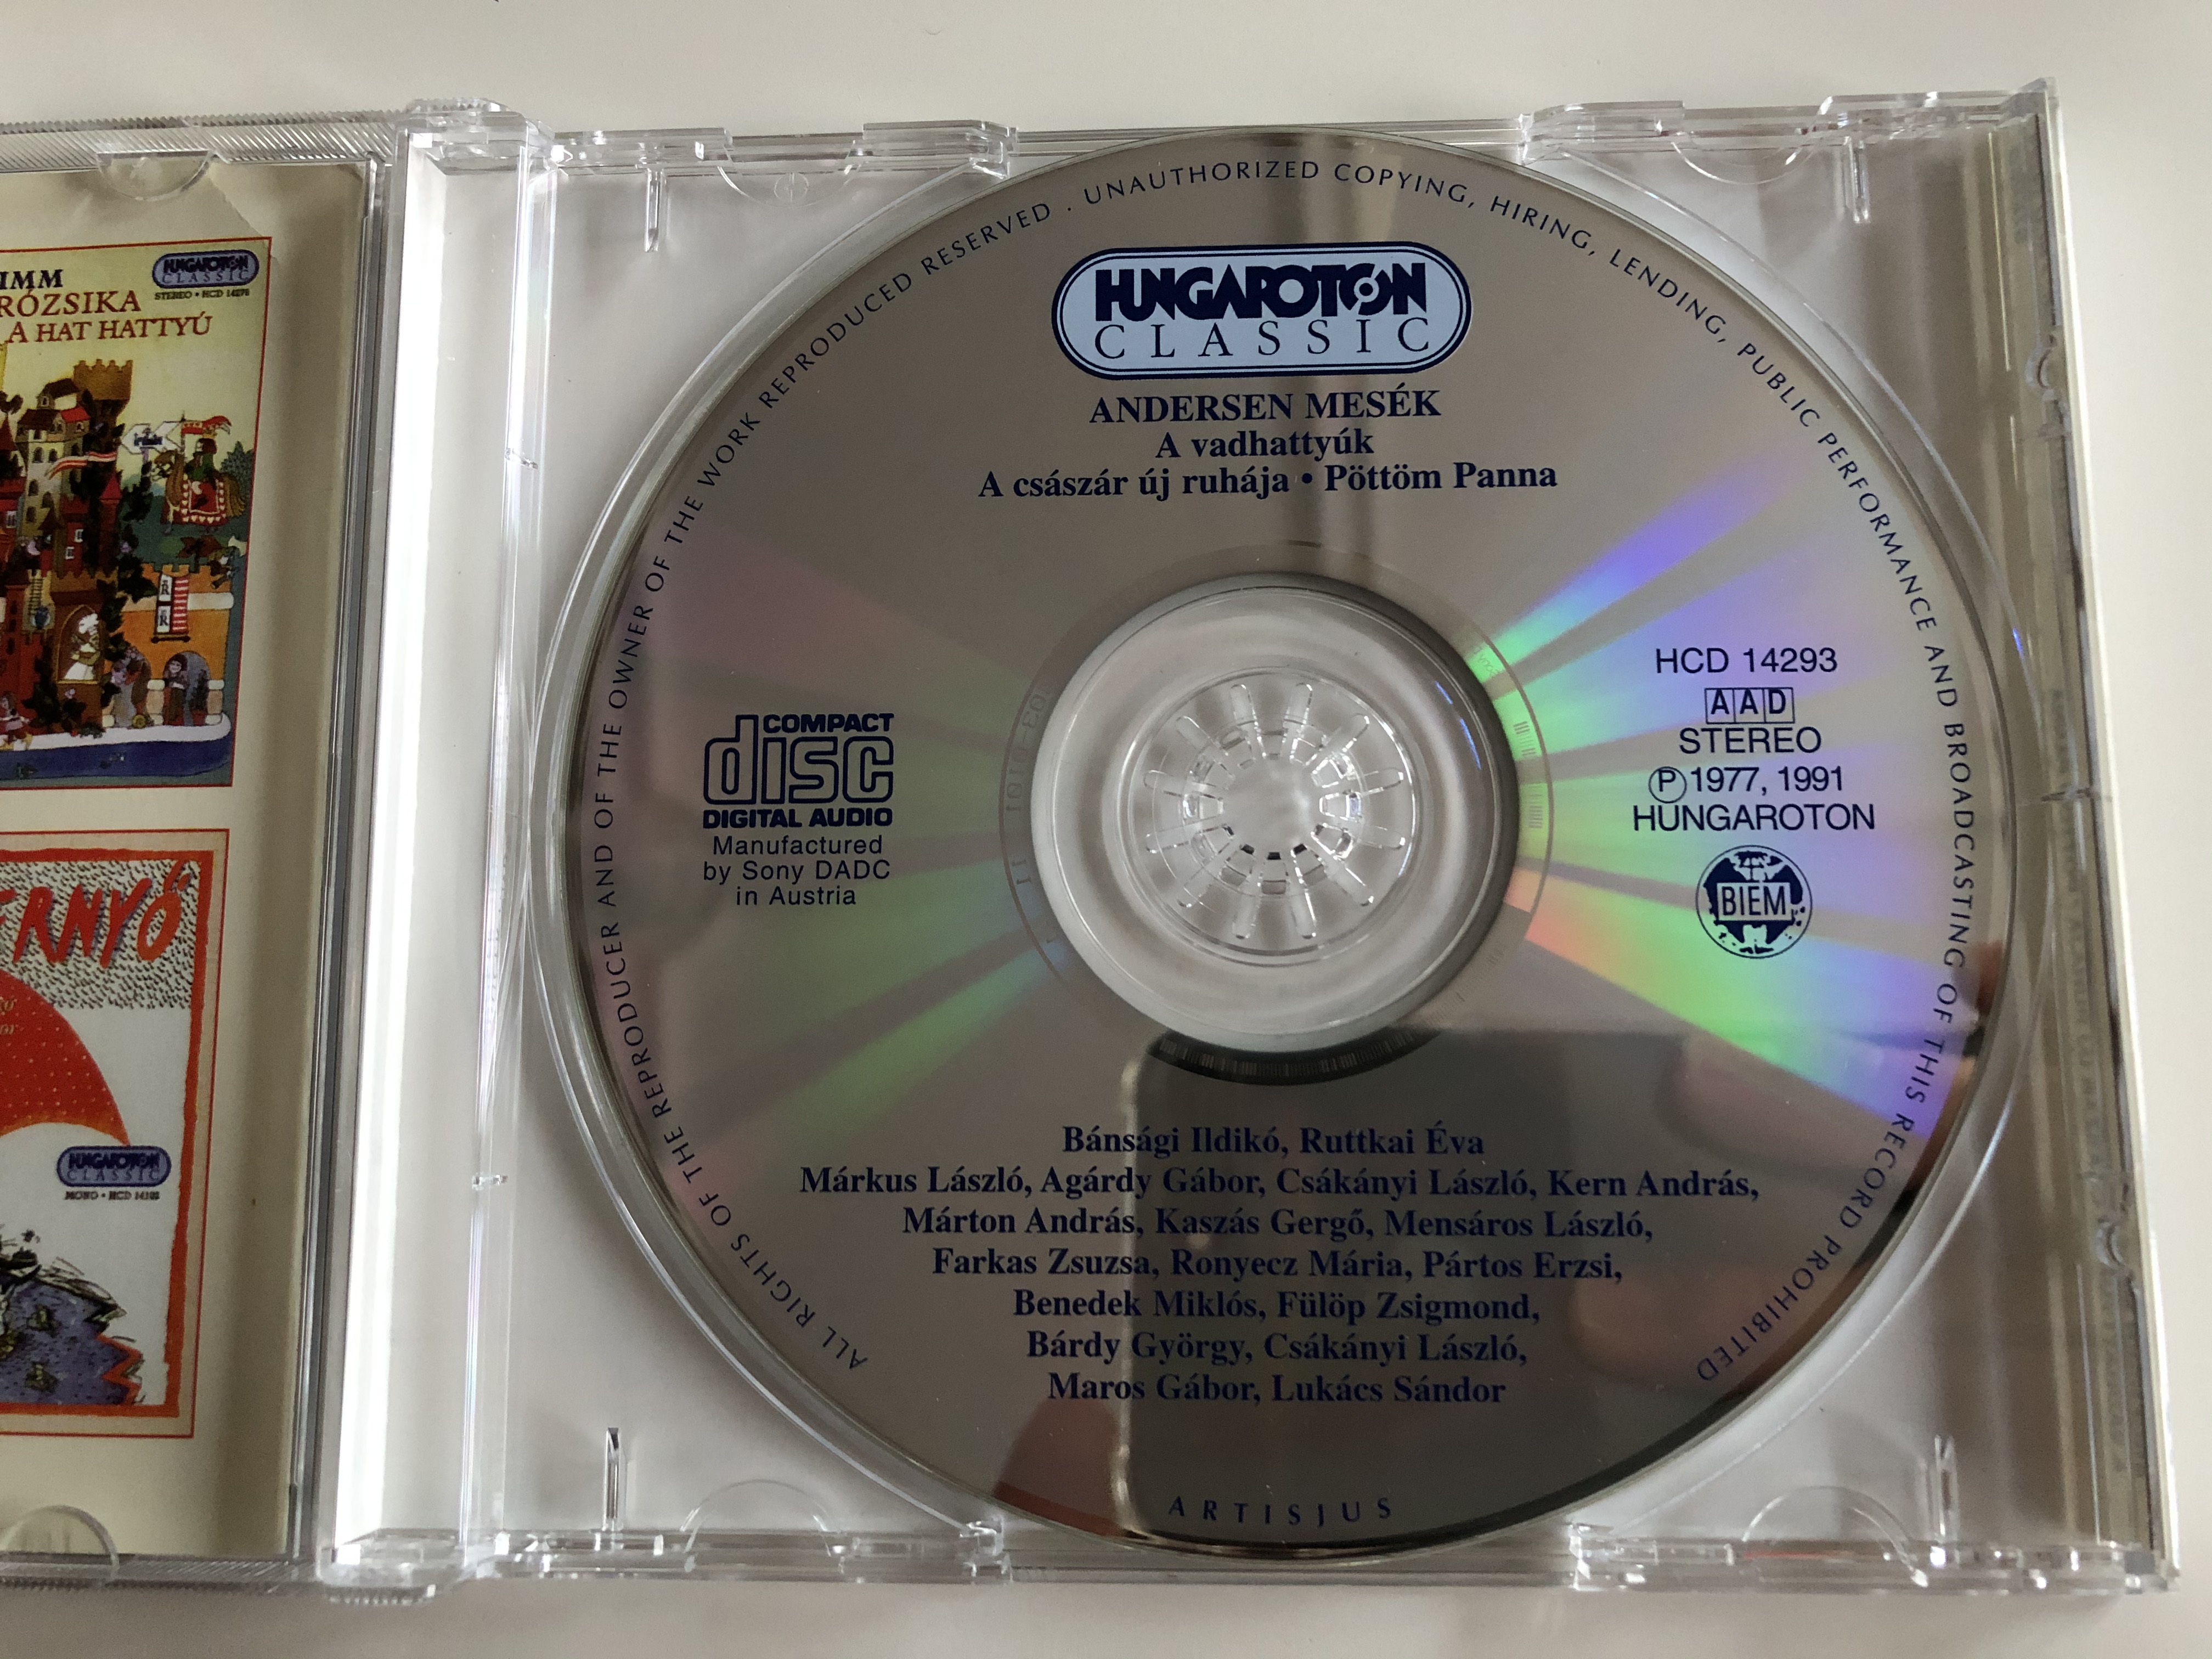 andersen-mesek-a-vadhatty-k-a-cs-sz-r-j-ruh-ja-p-tt-m-panna-hungaroton-classic-audio-cd-2001-stereo-hcd-14293-4-.jpg